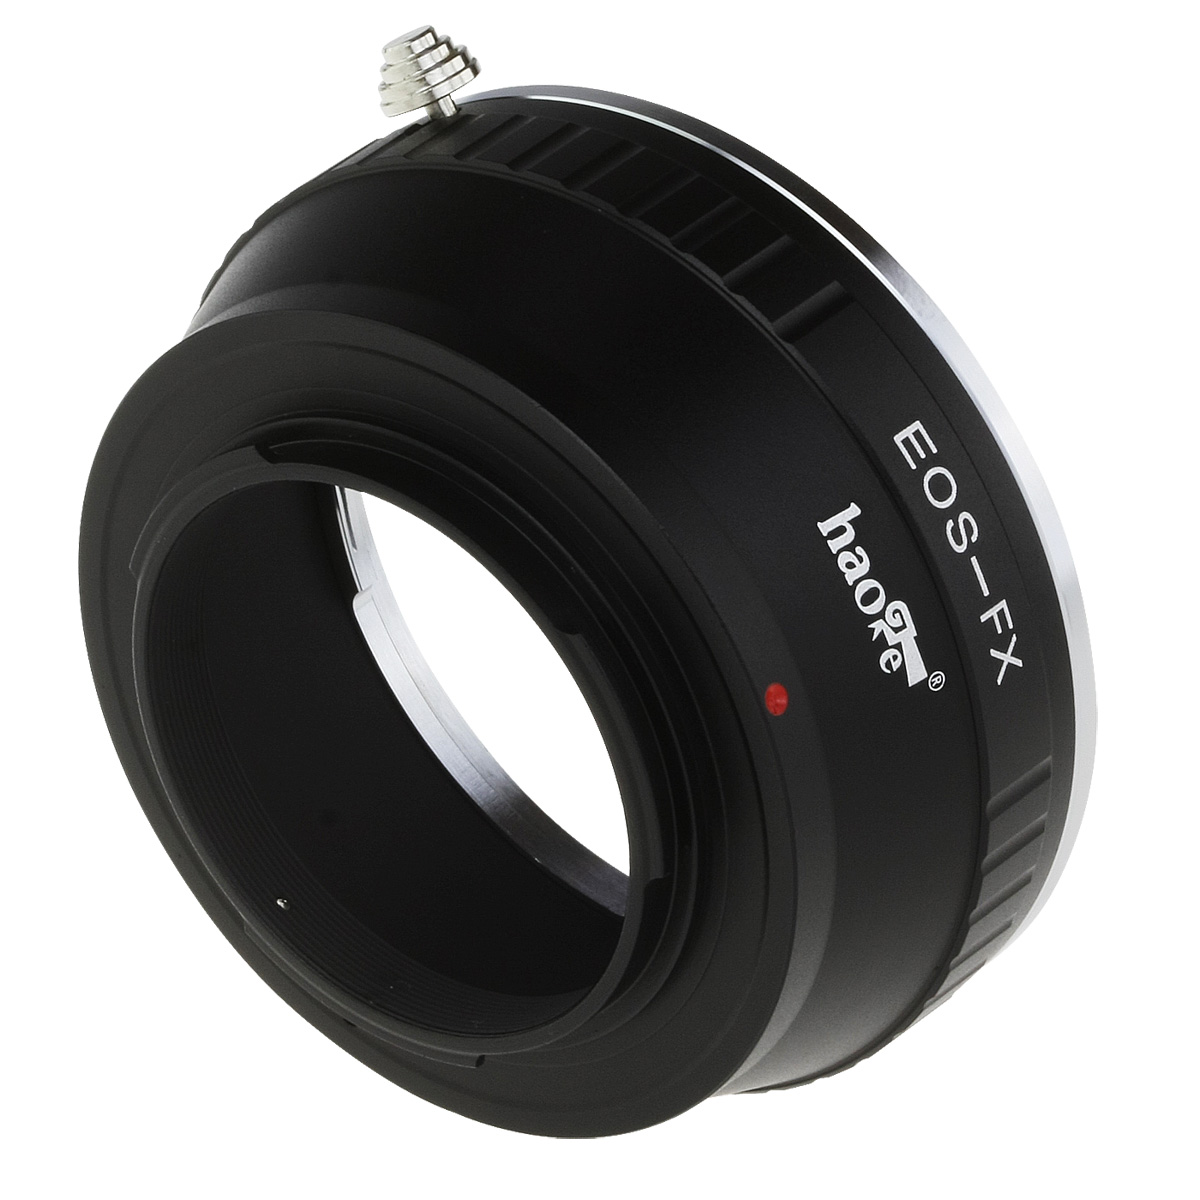 Adapter For Canon Eos Ef Ef S Efs Lens To Fujifilm X T10 T1 Pro2 E2 E2s